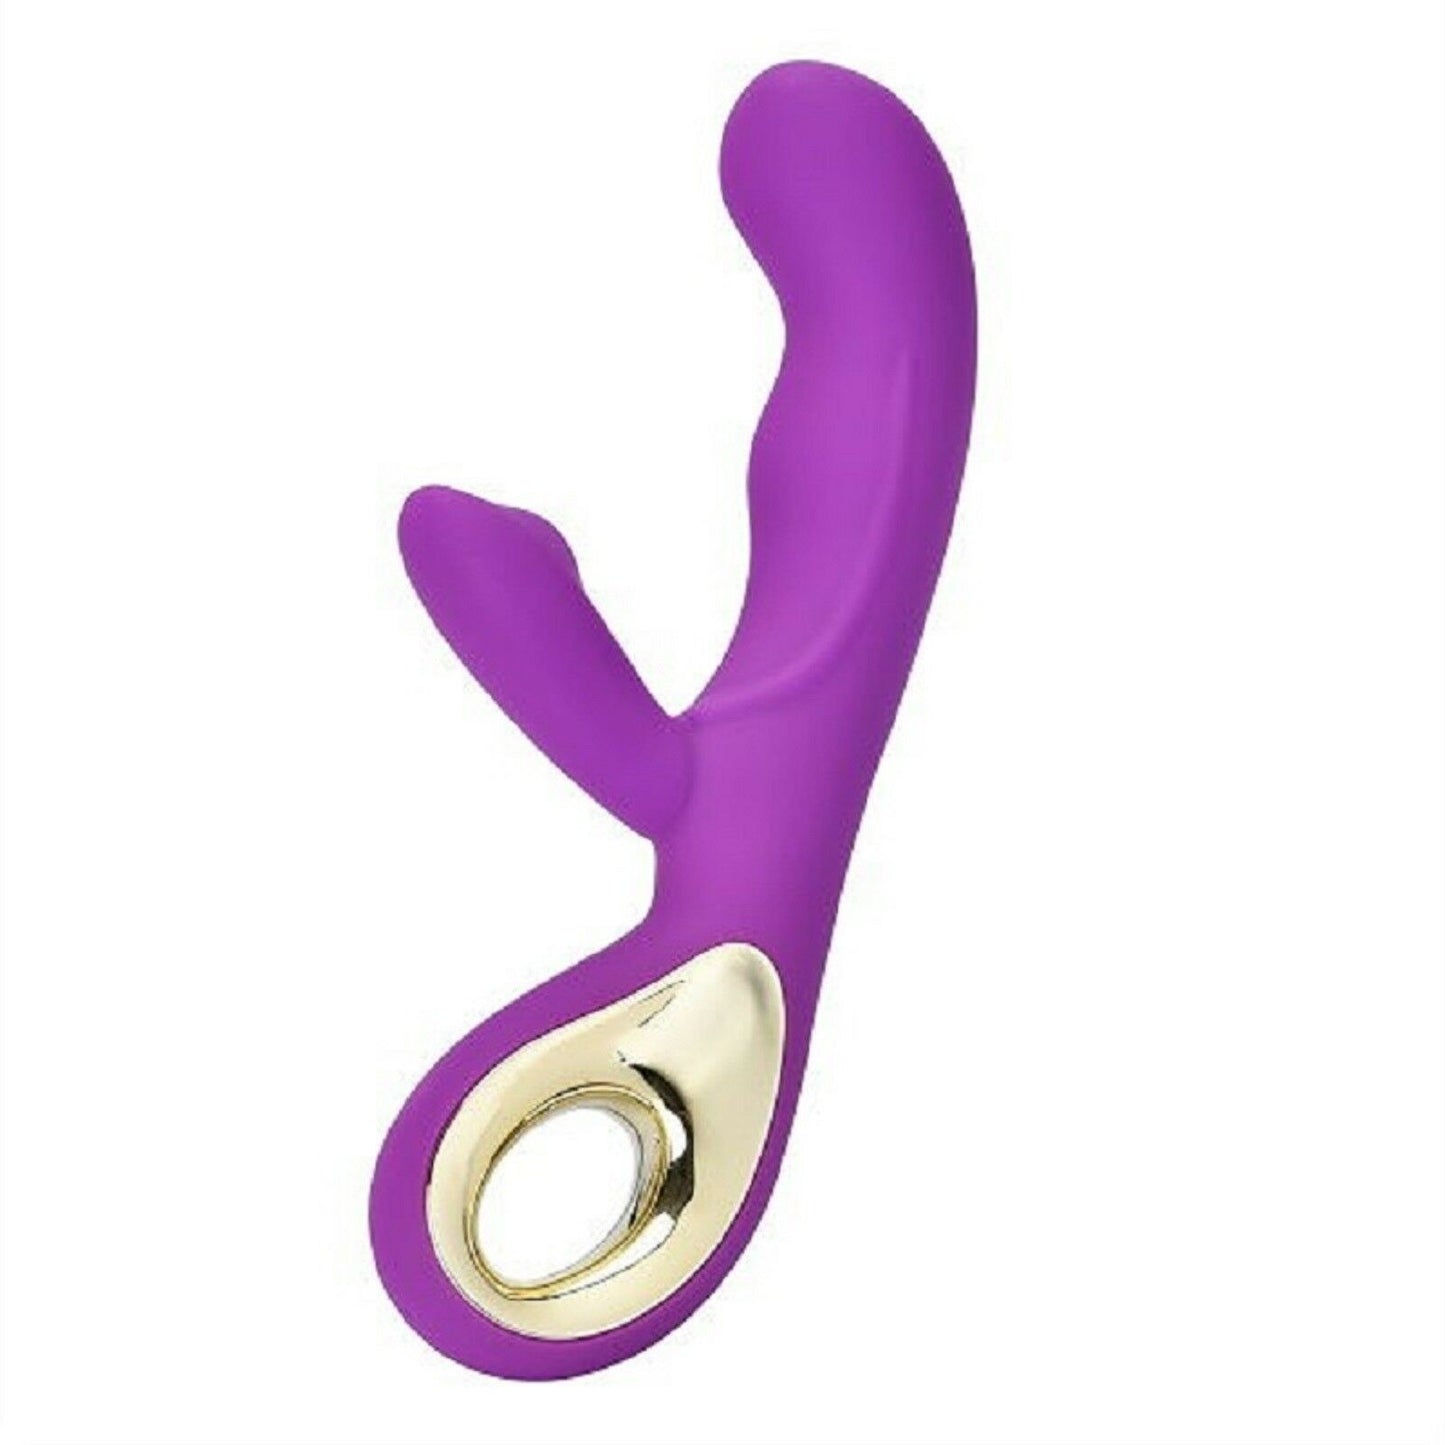 Rabbit Clit Vibrator Dildo G-Spot Clitoris Rechargeable Wand Female Anal Sex Toy